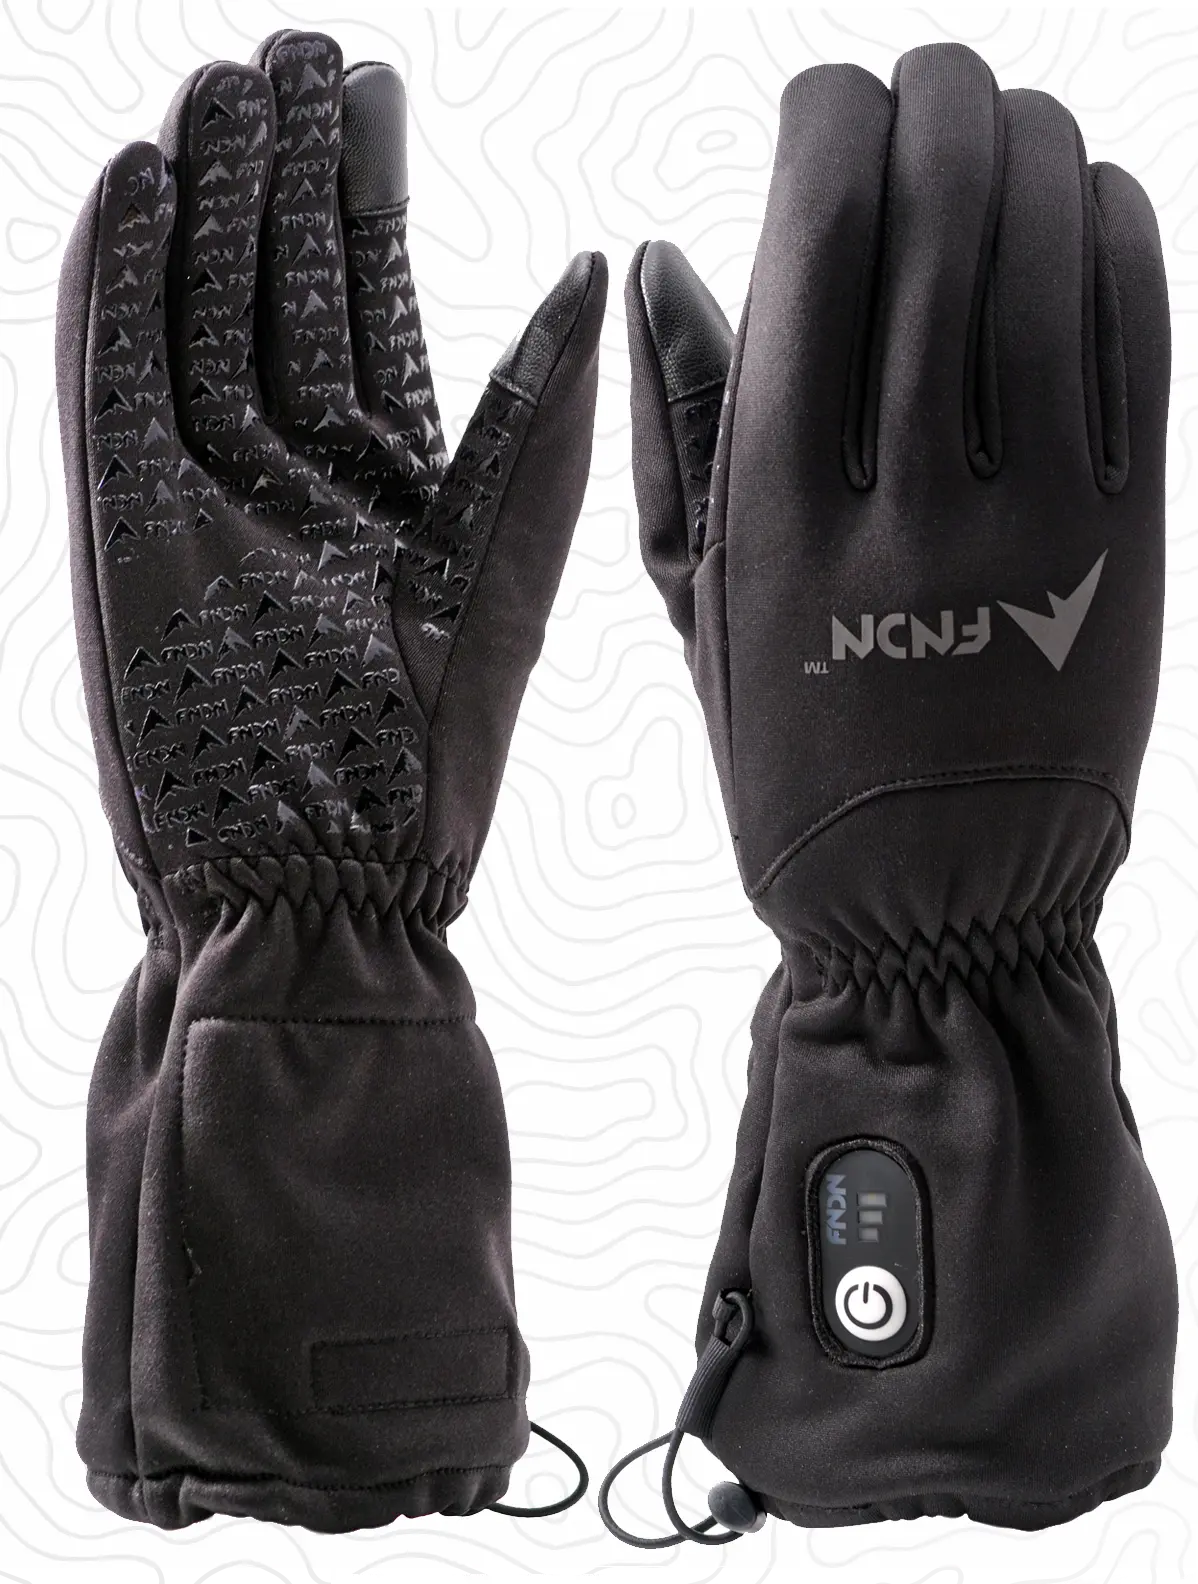 FNDN Heated Gloves